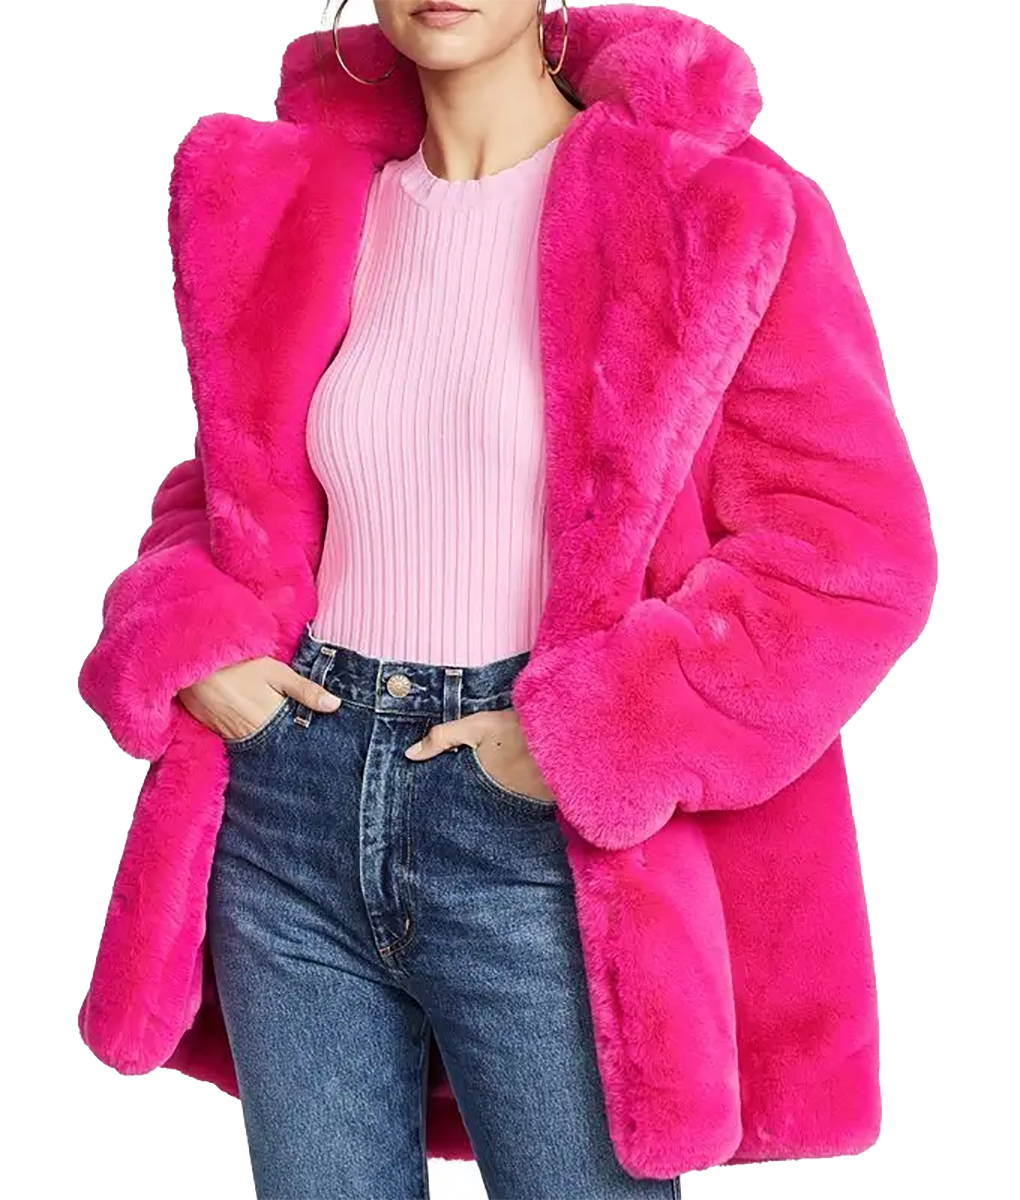 Taylor Swift Pink Fur Coat (2)